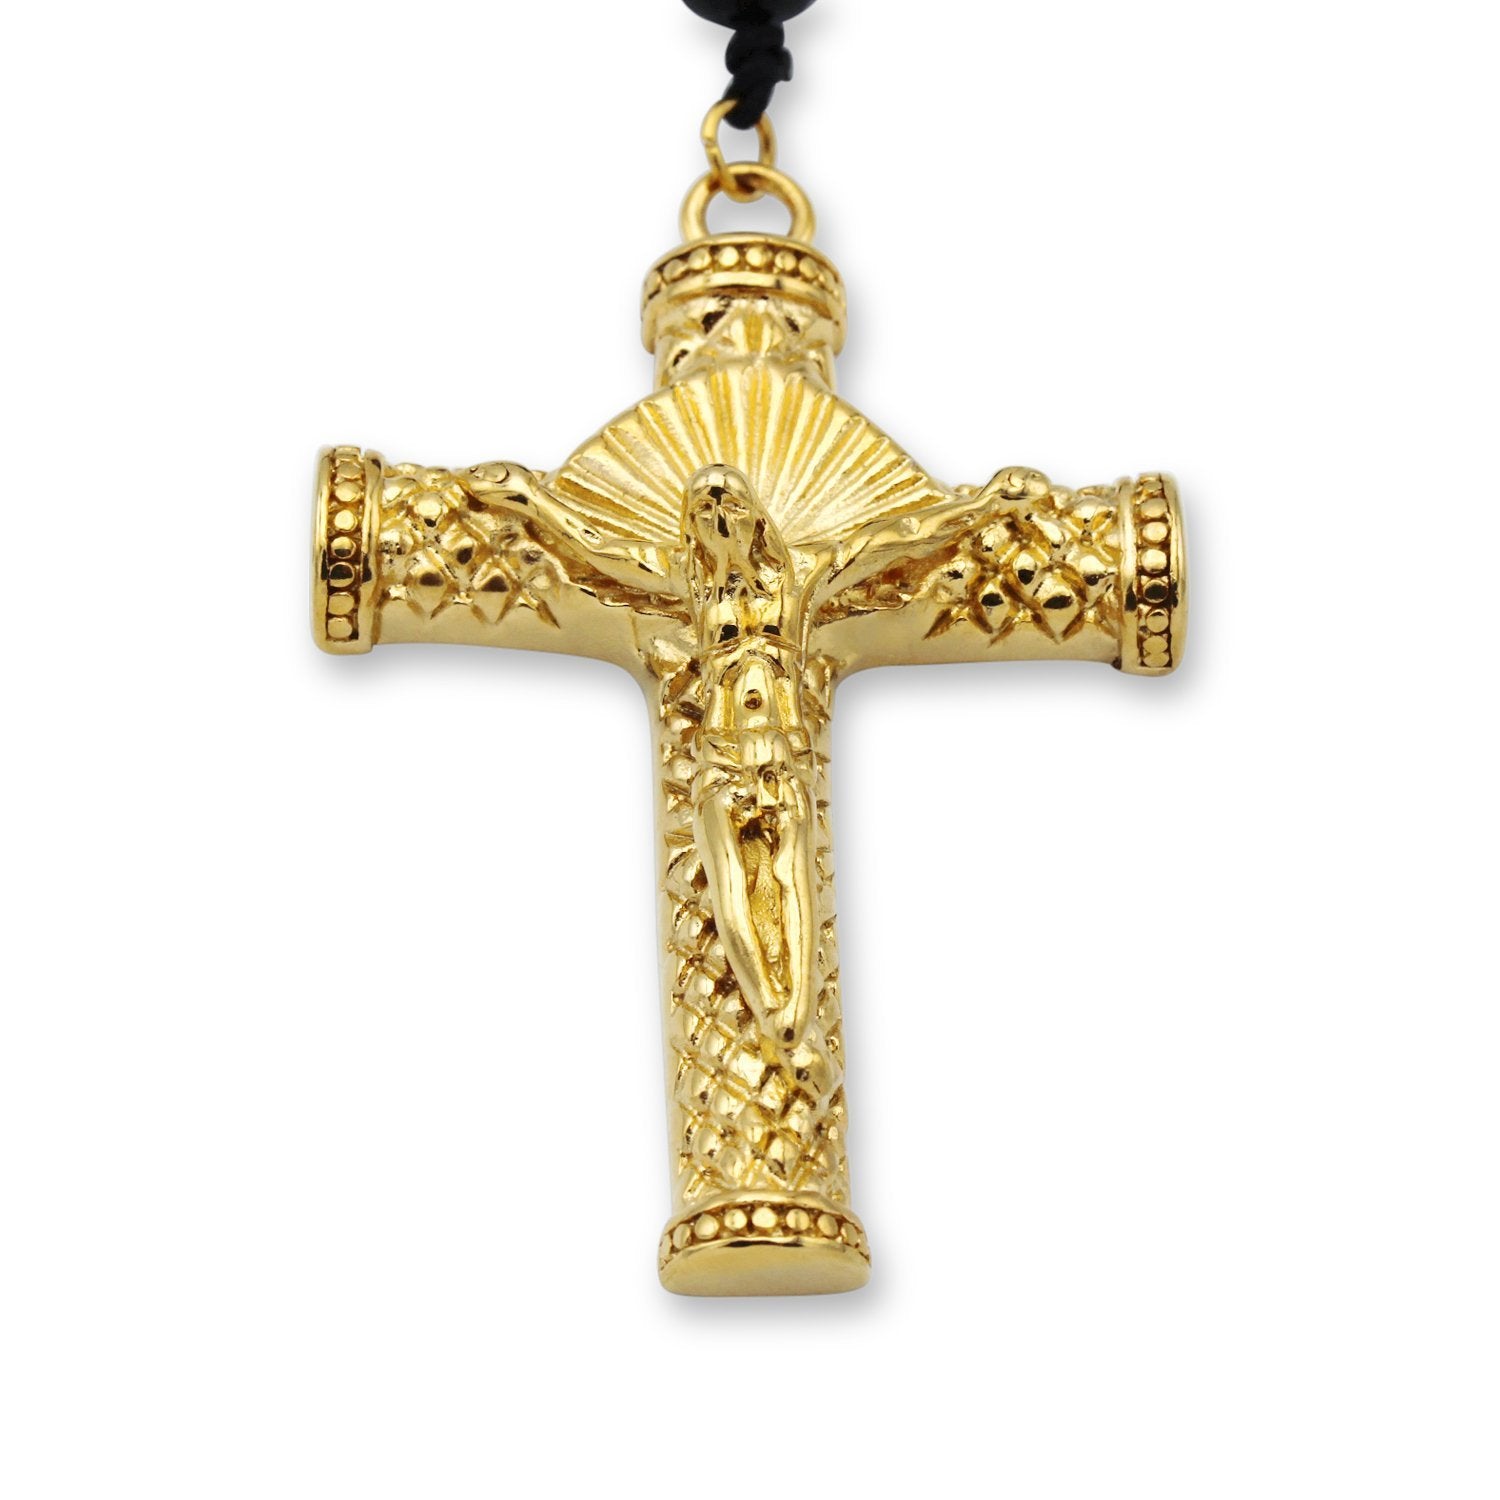 Fancy Rosary Necklace Five Decade Catholic Prayer Acrylic Beads Crucifix Pendant